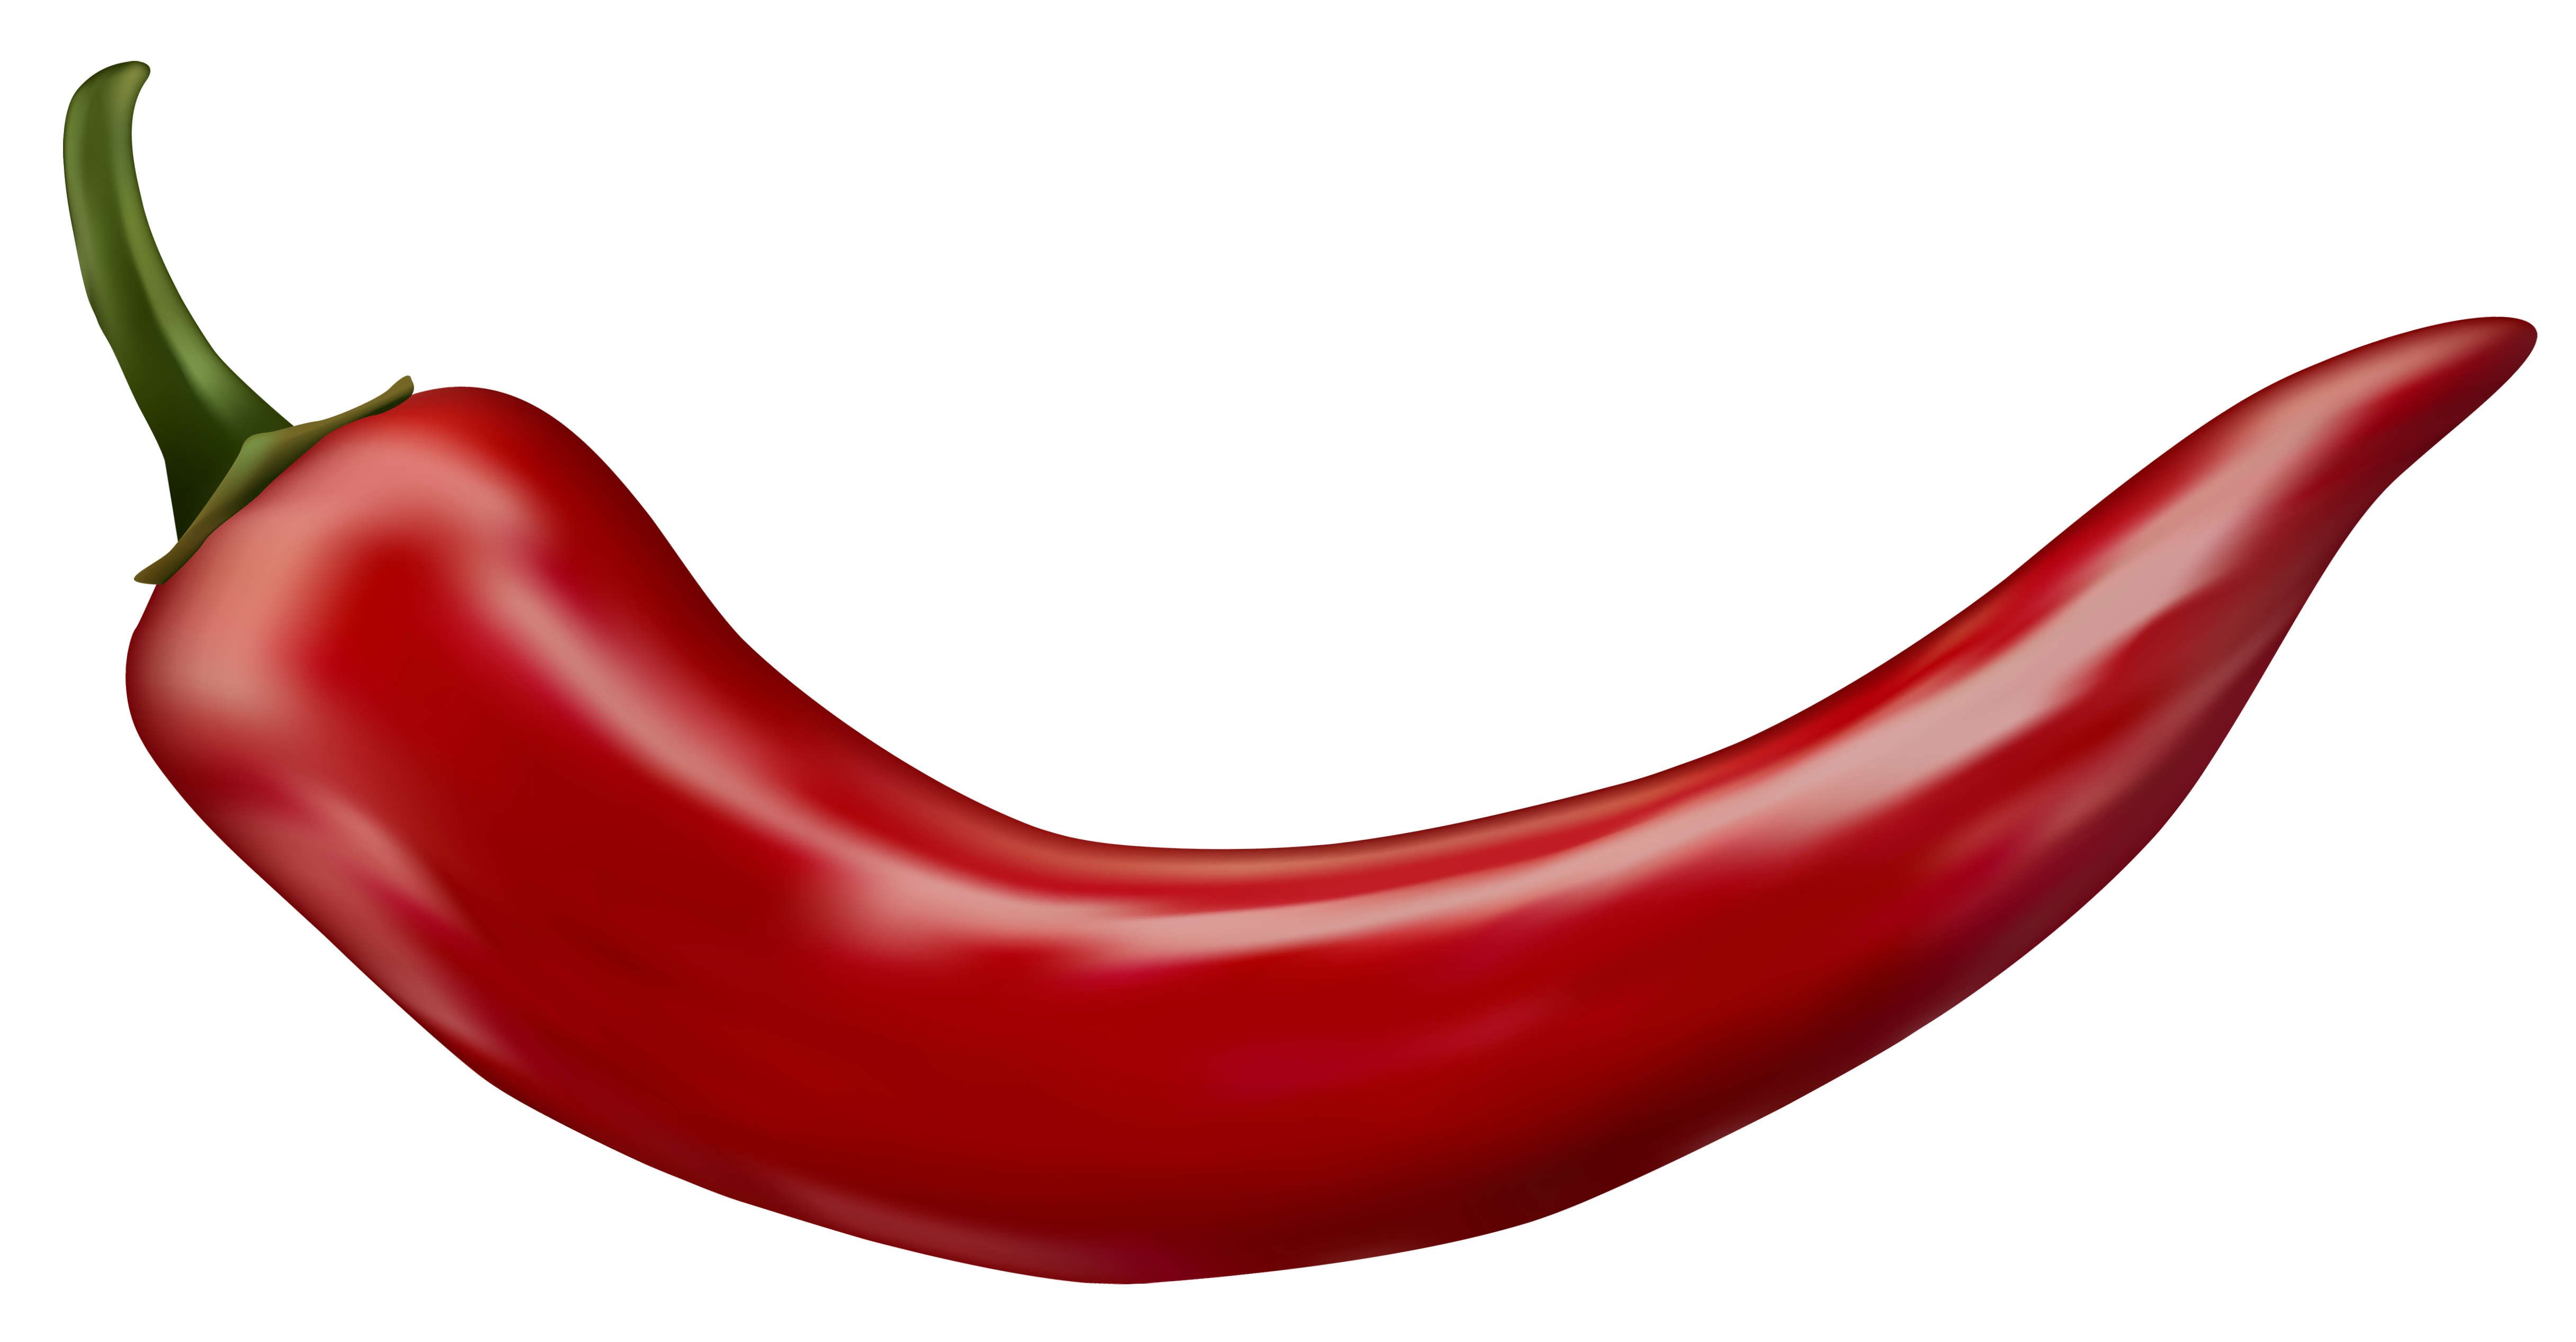 Red chili pepper transparent. 3 clipart chilli